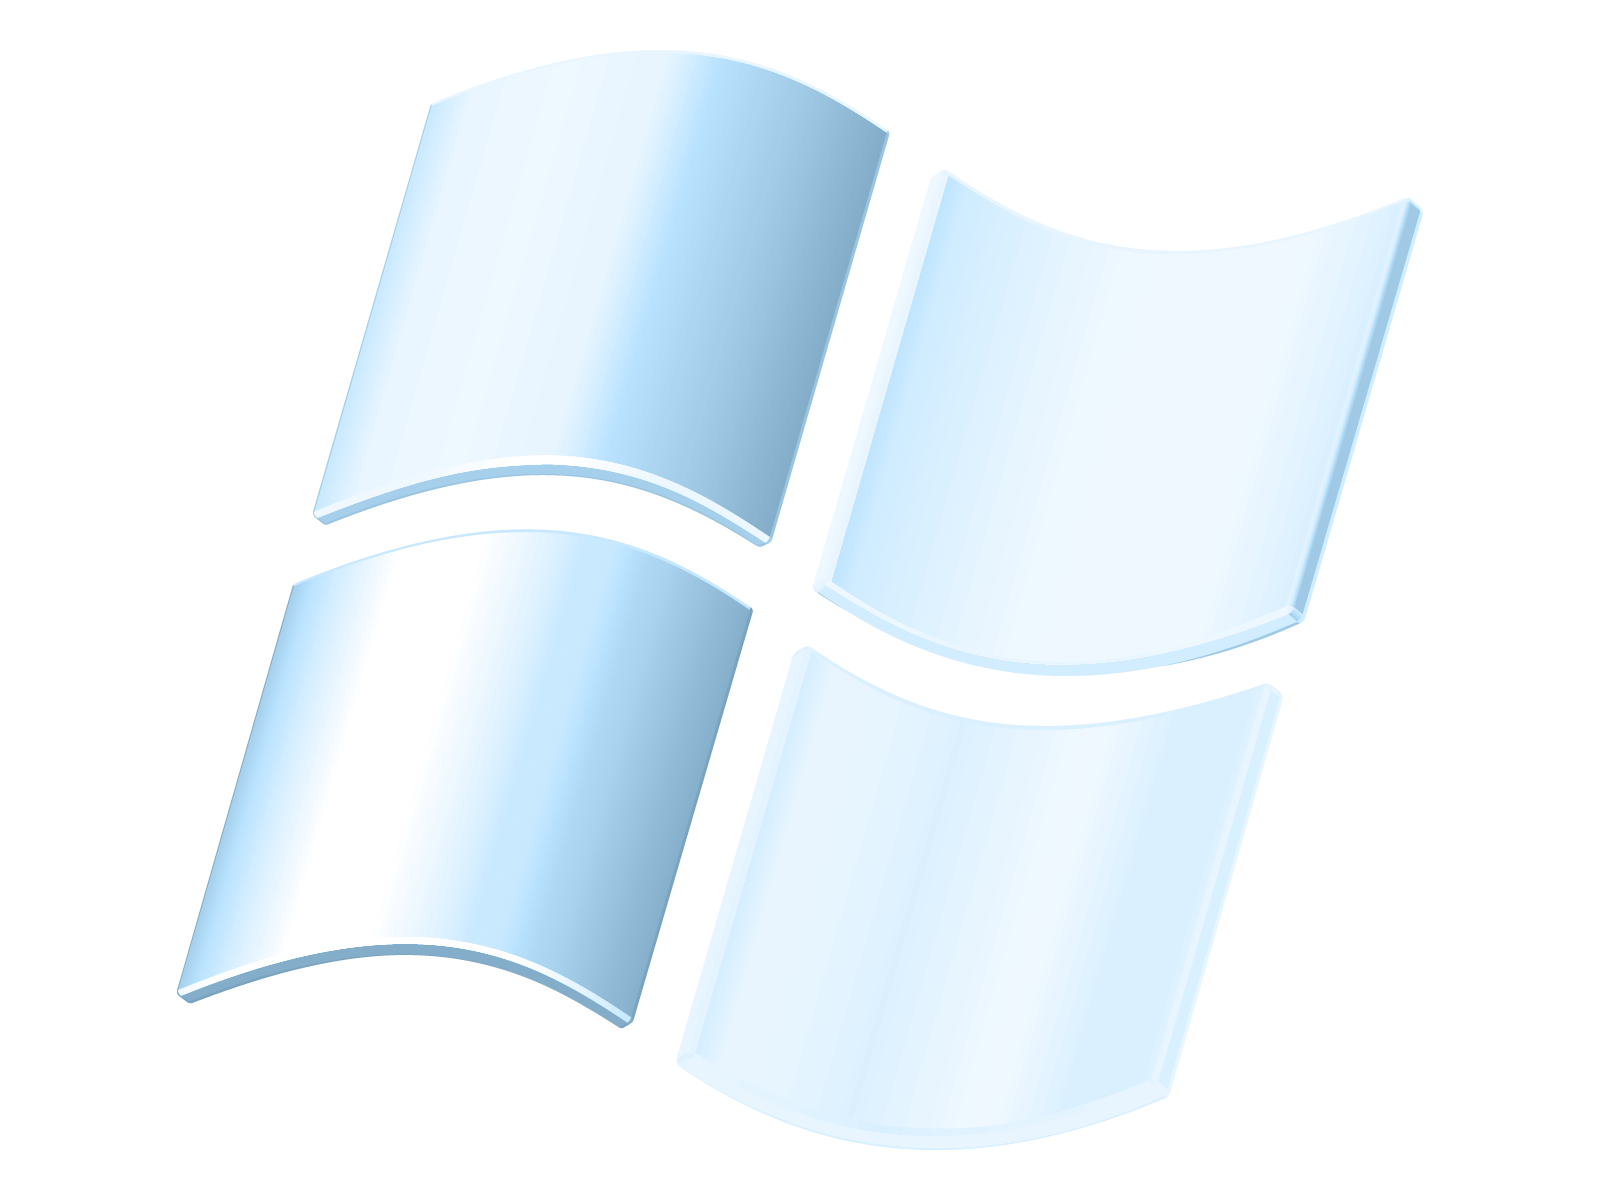 Windows Longhorn Logo - Windows Longhorn | MARIO player PL Wiki | FANDOM powered by Wikia